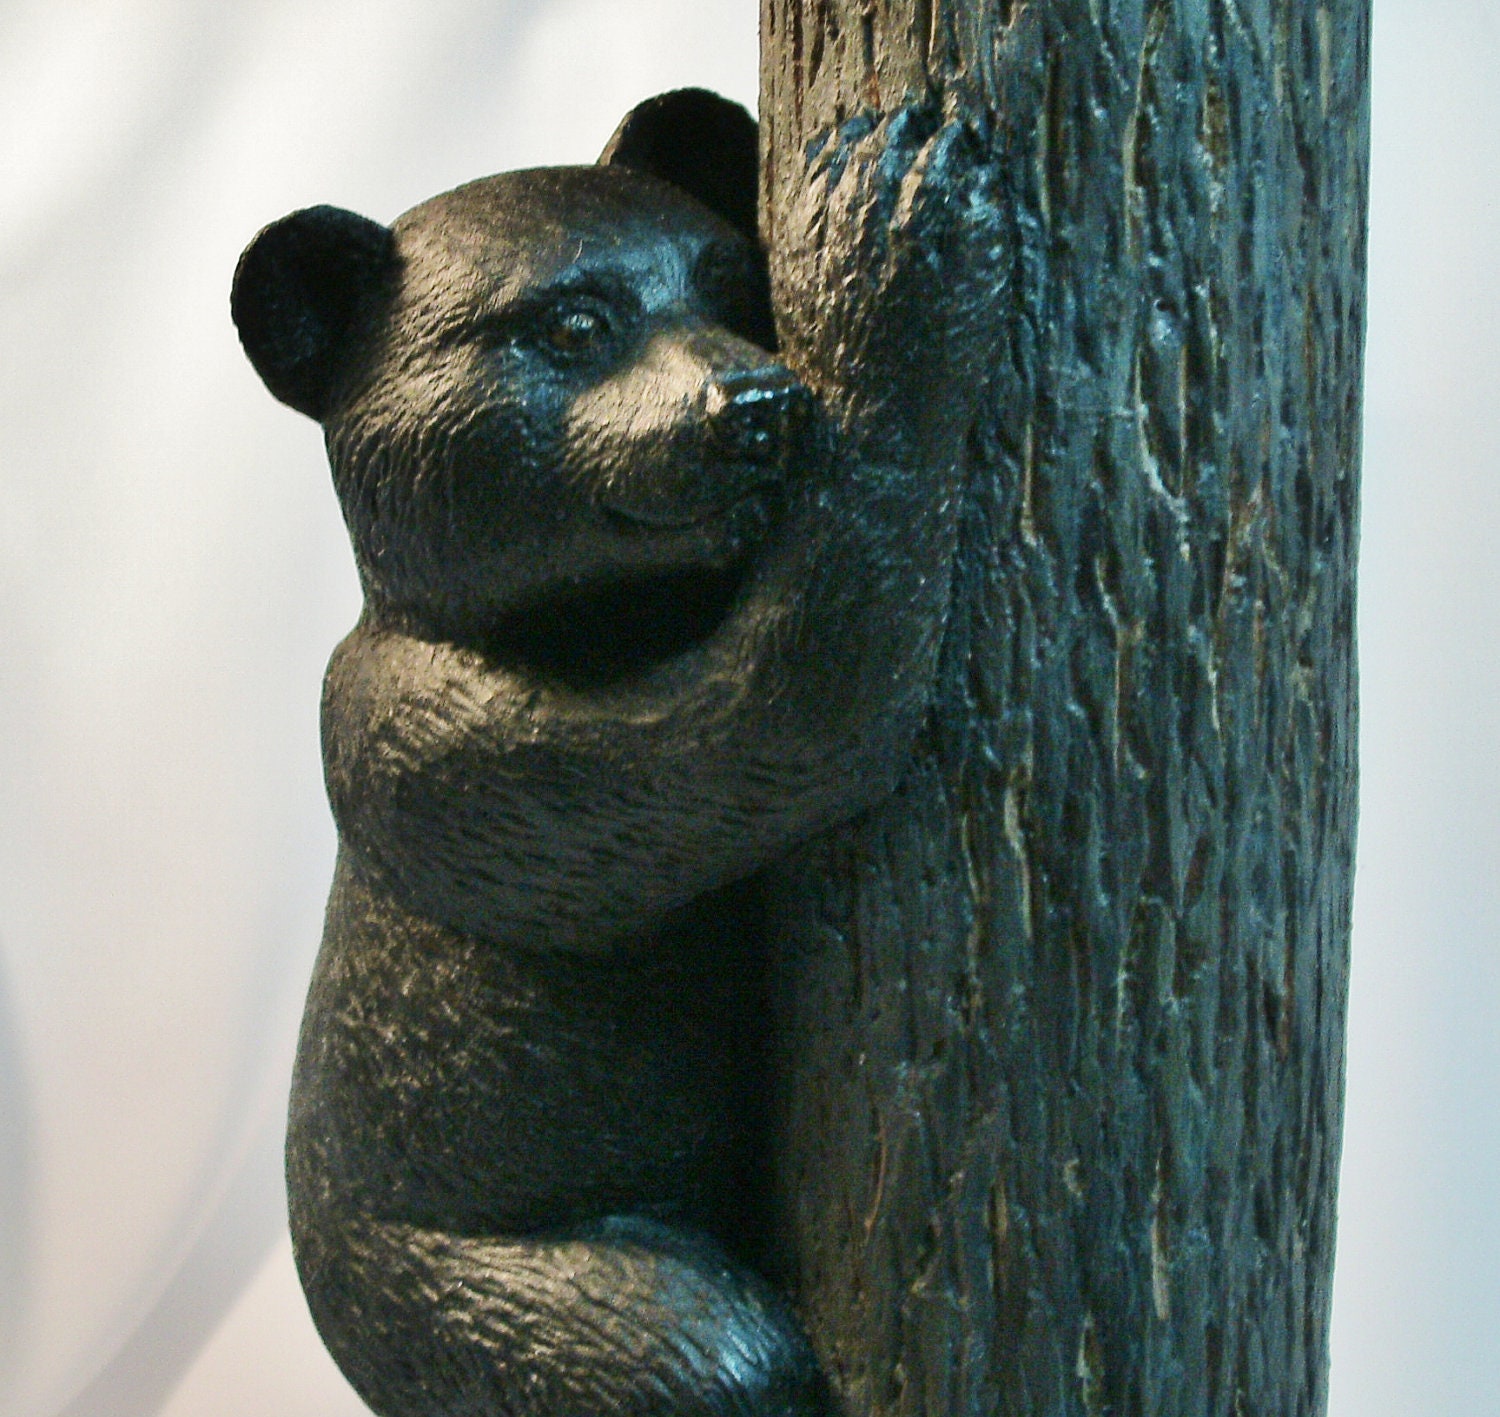 Black Bear Cub Climbing a Tree Wood Carving by OsbornArtistry